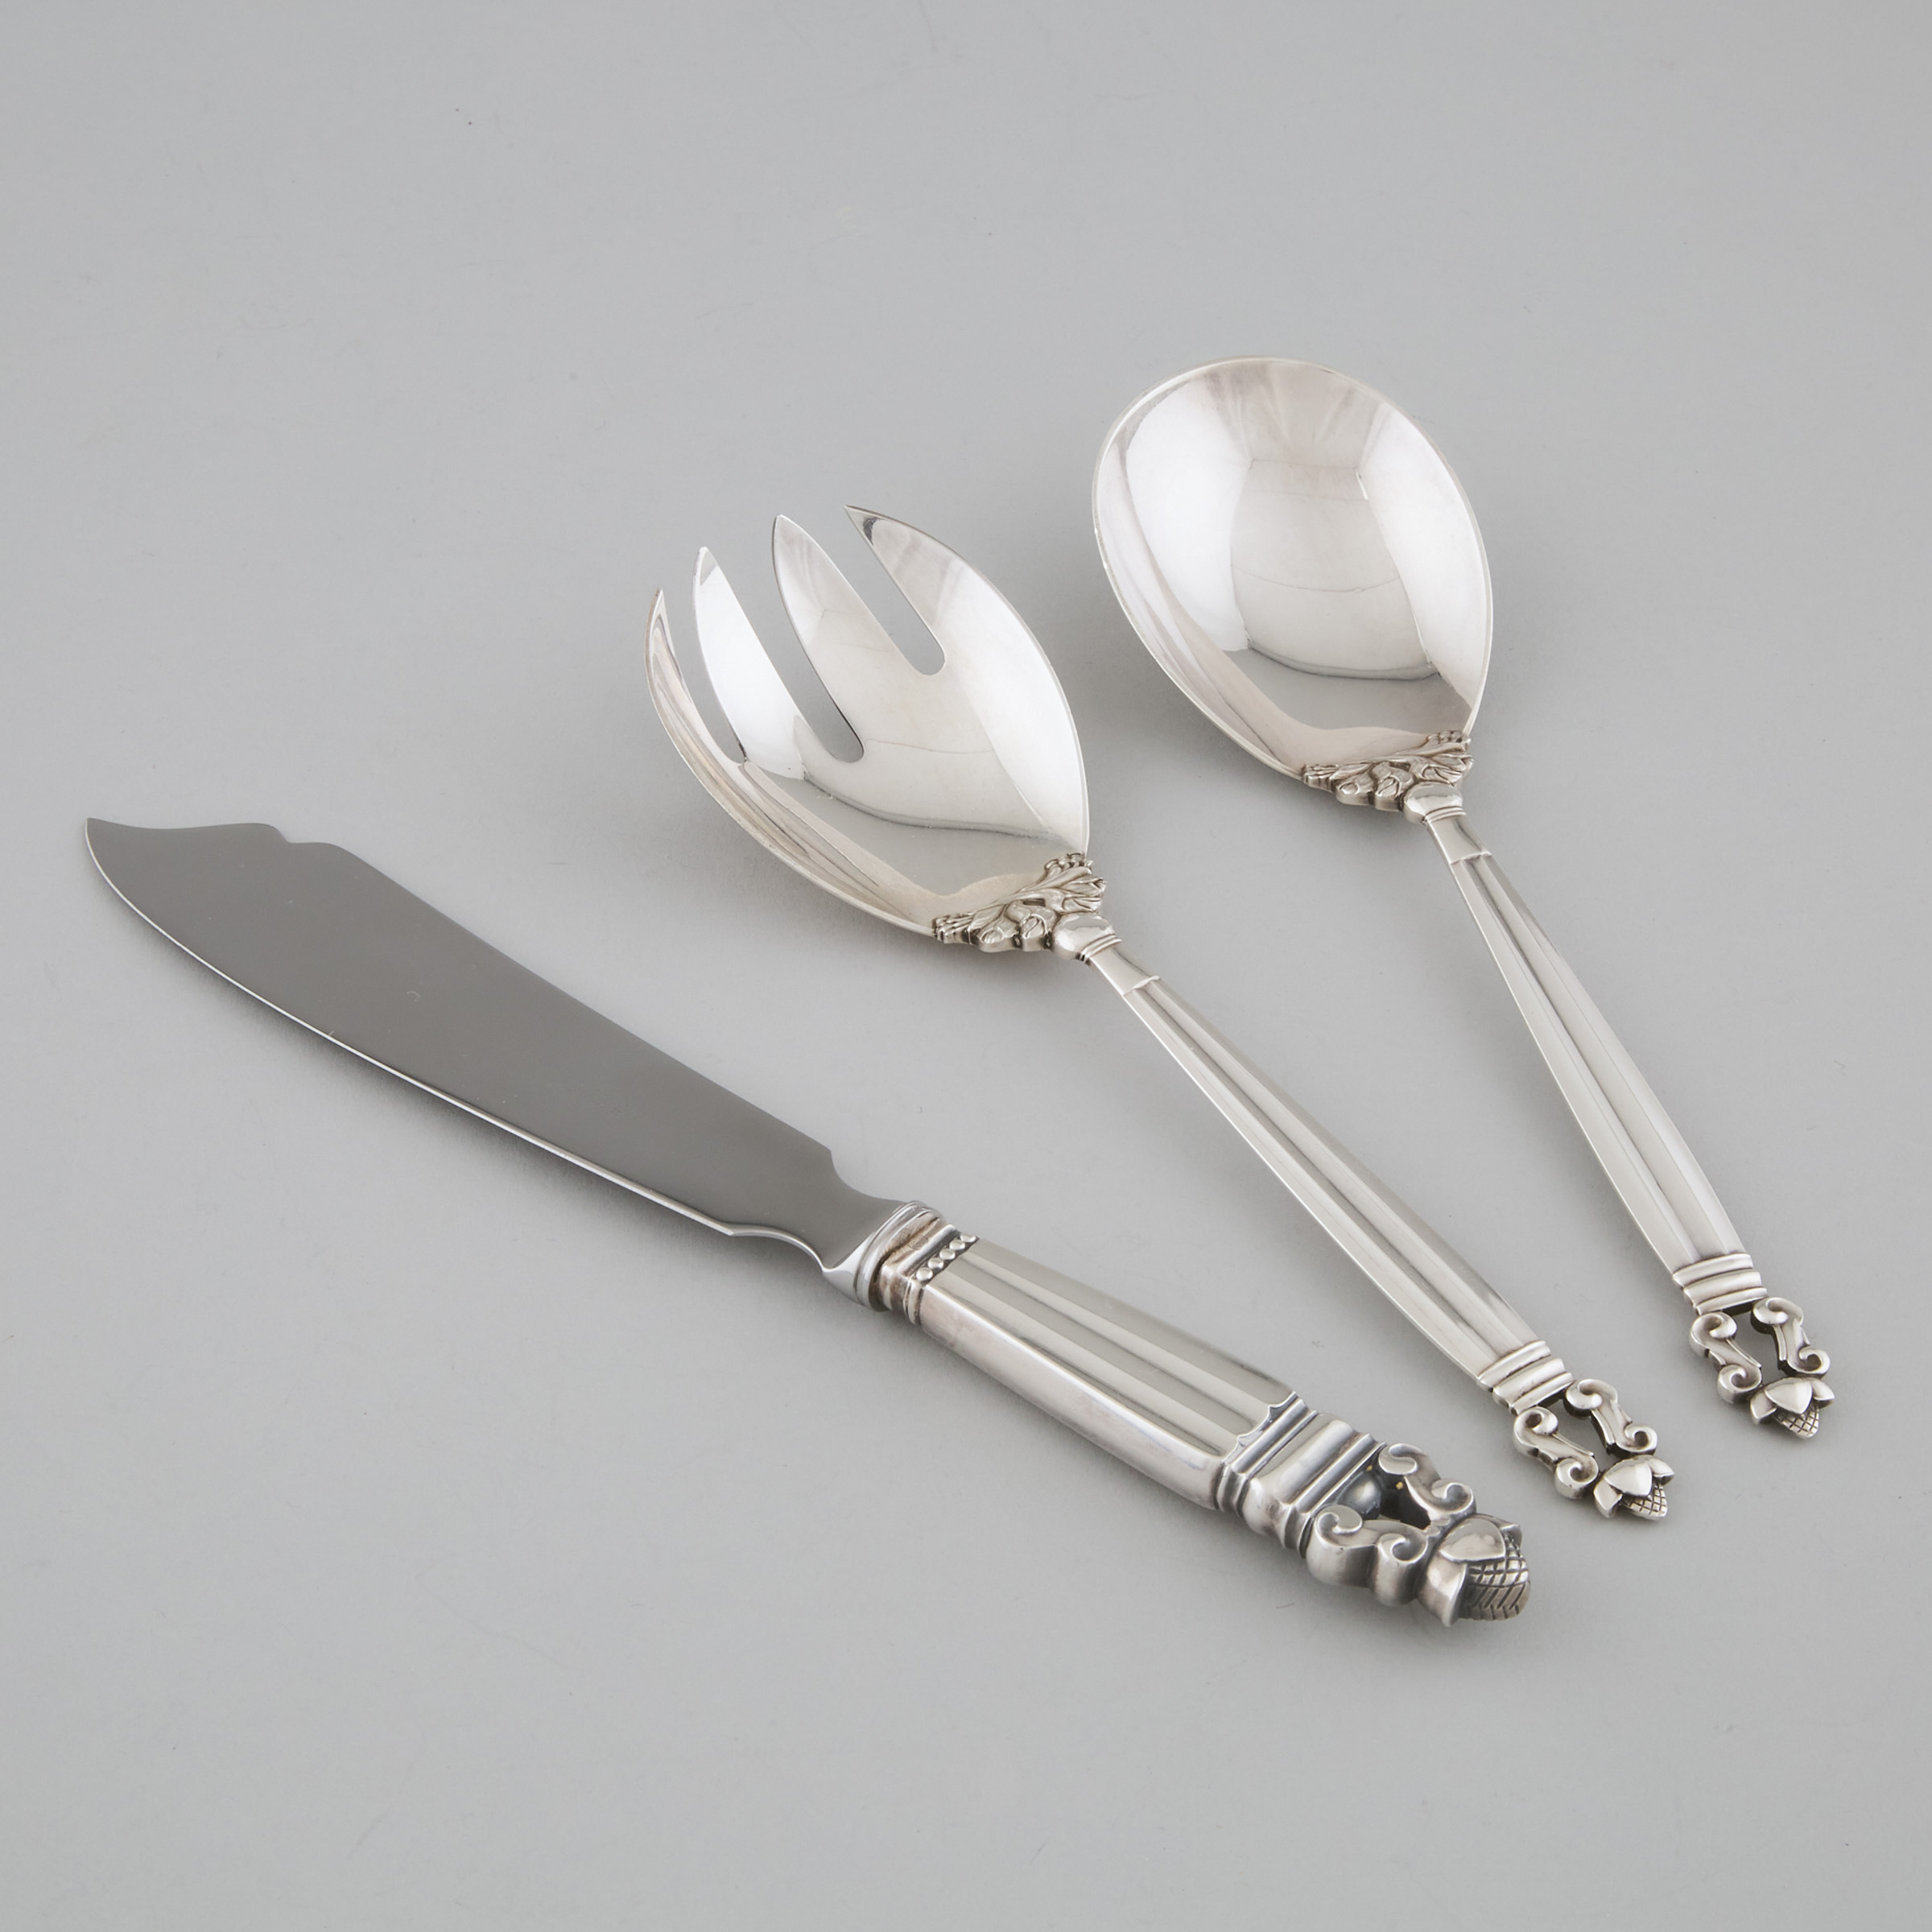 Danish Silver 'Acorn' Pattern Salad Servers and a Serving Knife, Johan Rohde for Georg Jensen, Copenhagen, 20th century